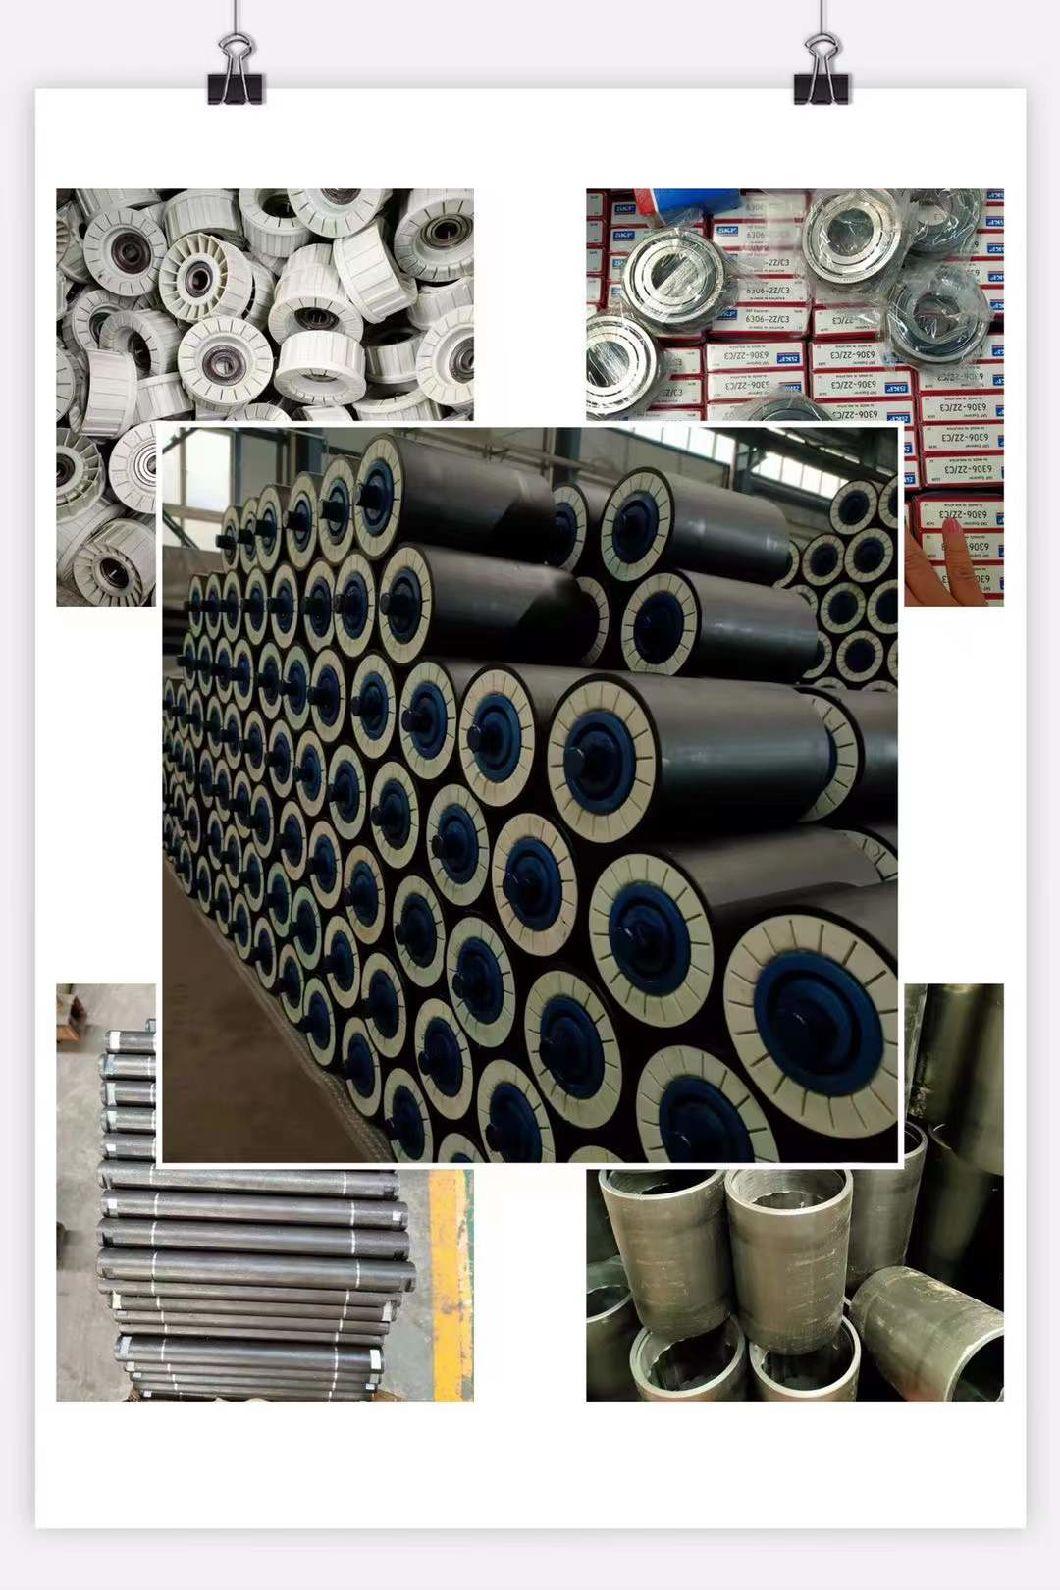 Quality Assured HDPE Conveyor Roller/ Plastic Roller/ Nylon Roller Huayue 89-159mm